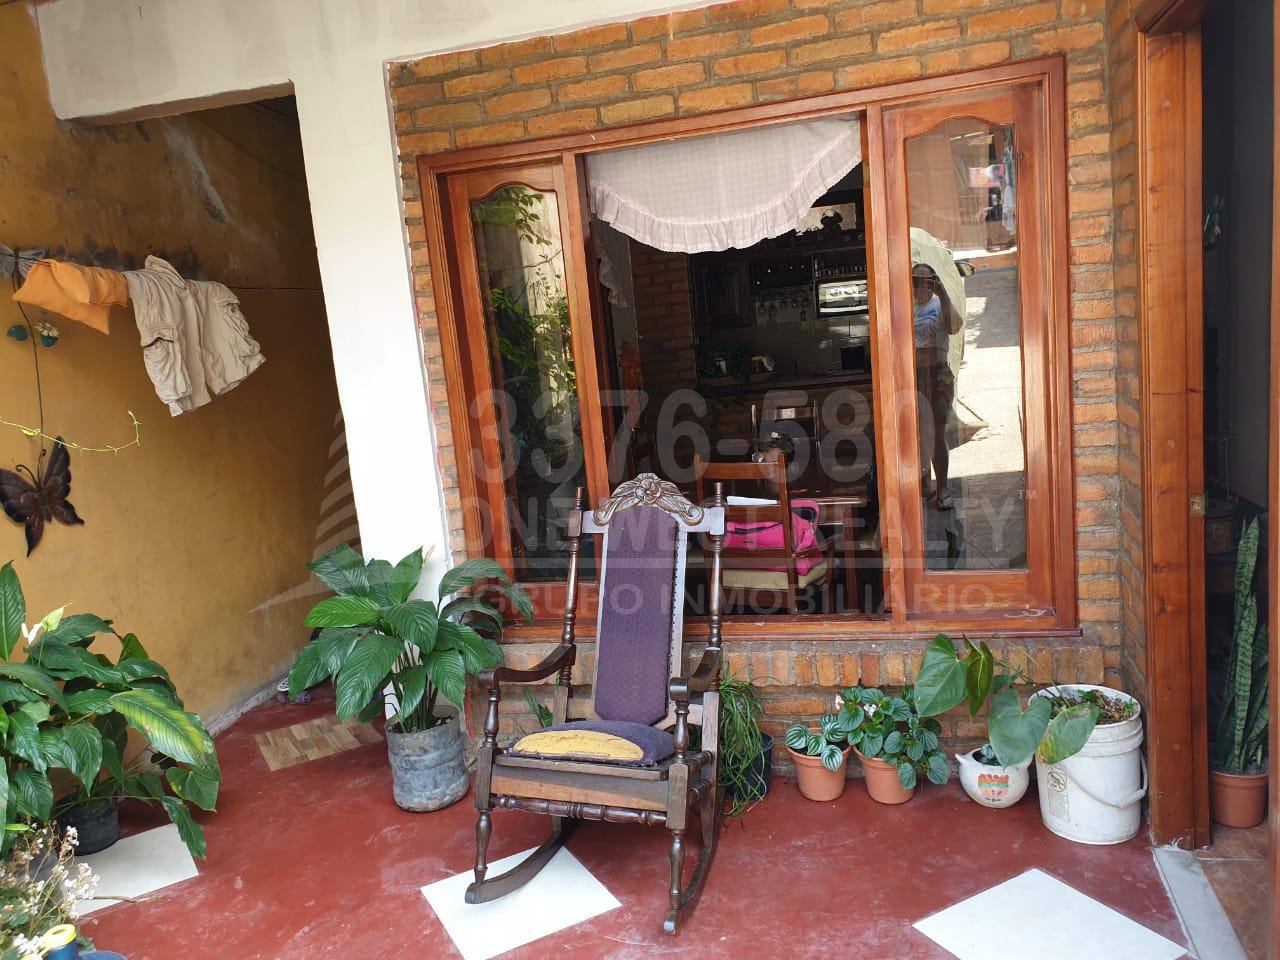 Residential Home for Sale in Copan Ruins, Honduras